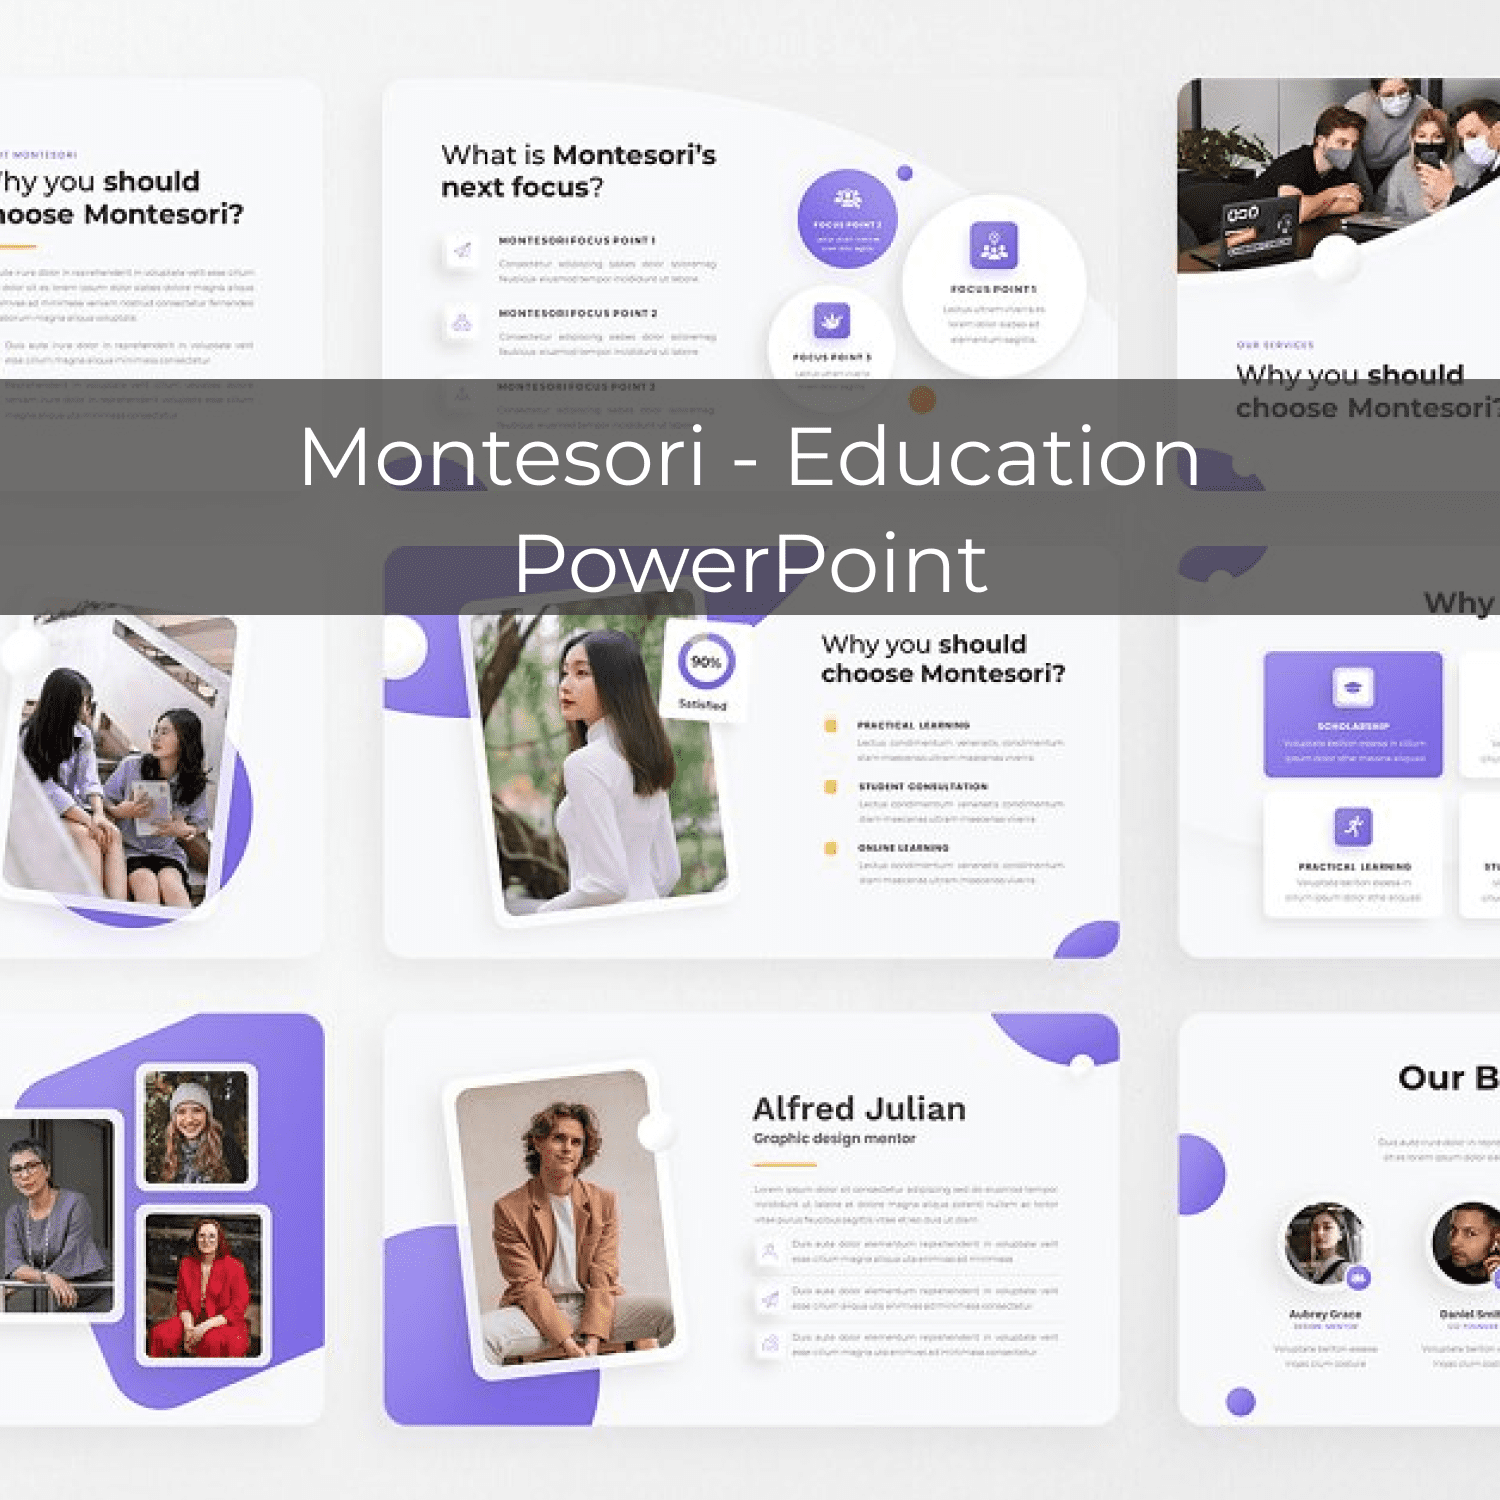 Montesori - Education PowerPoint cover.